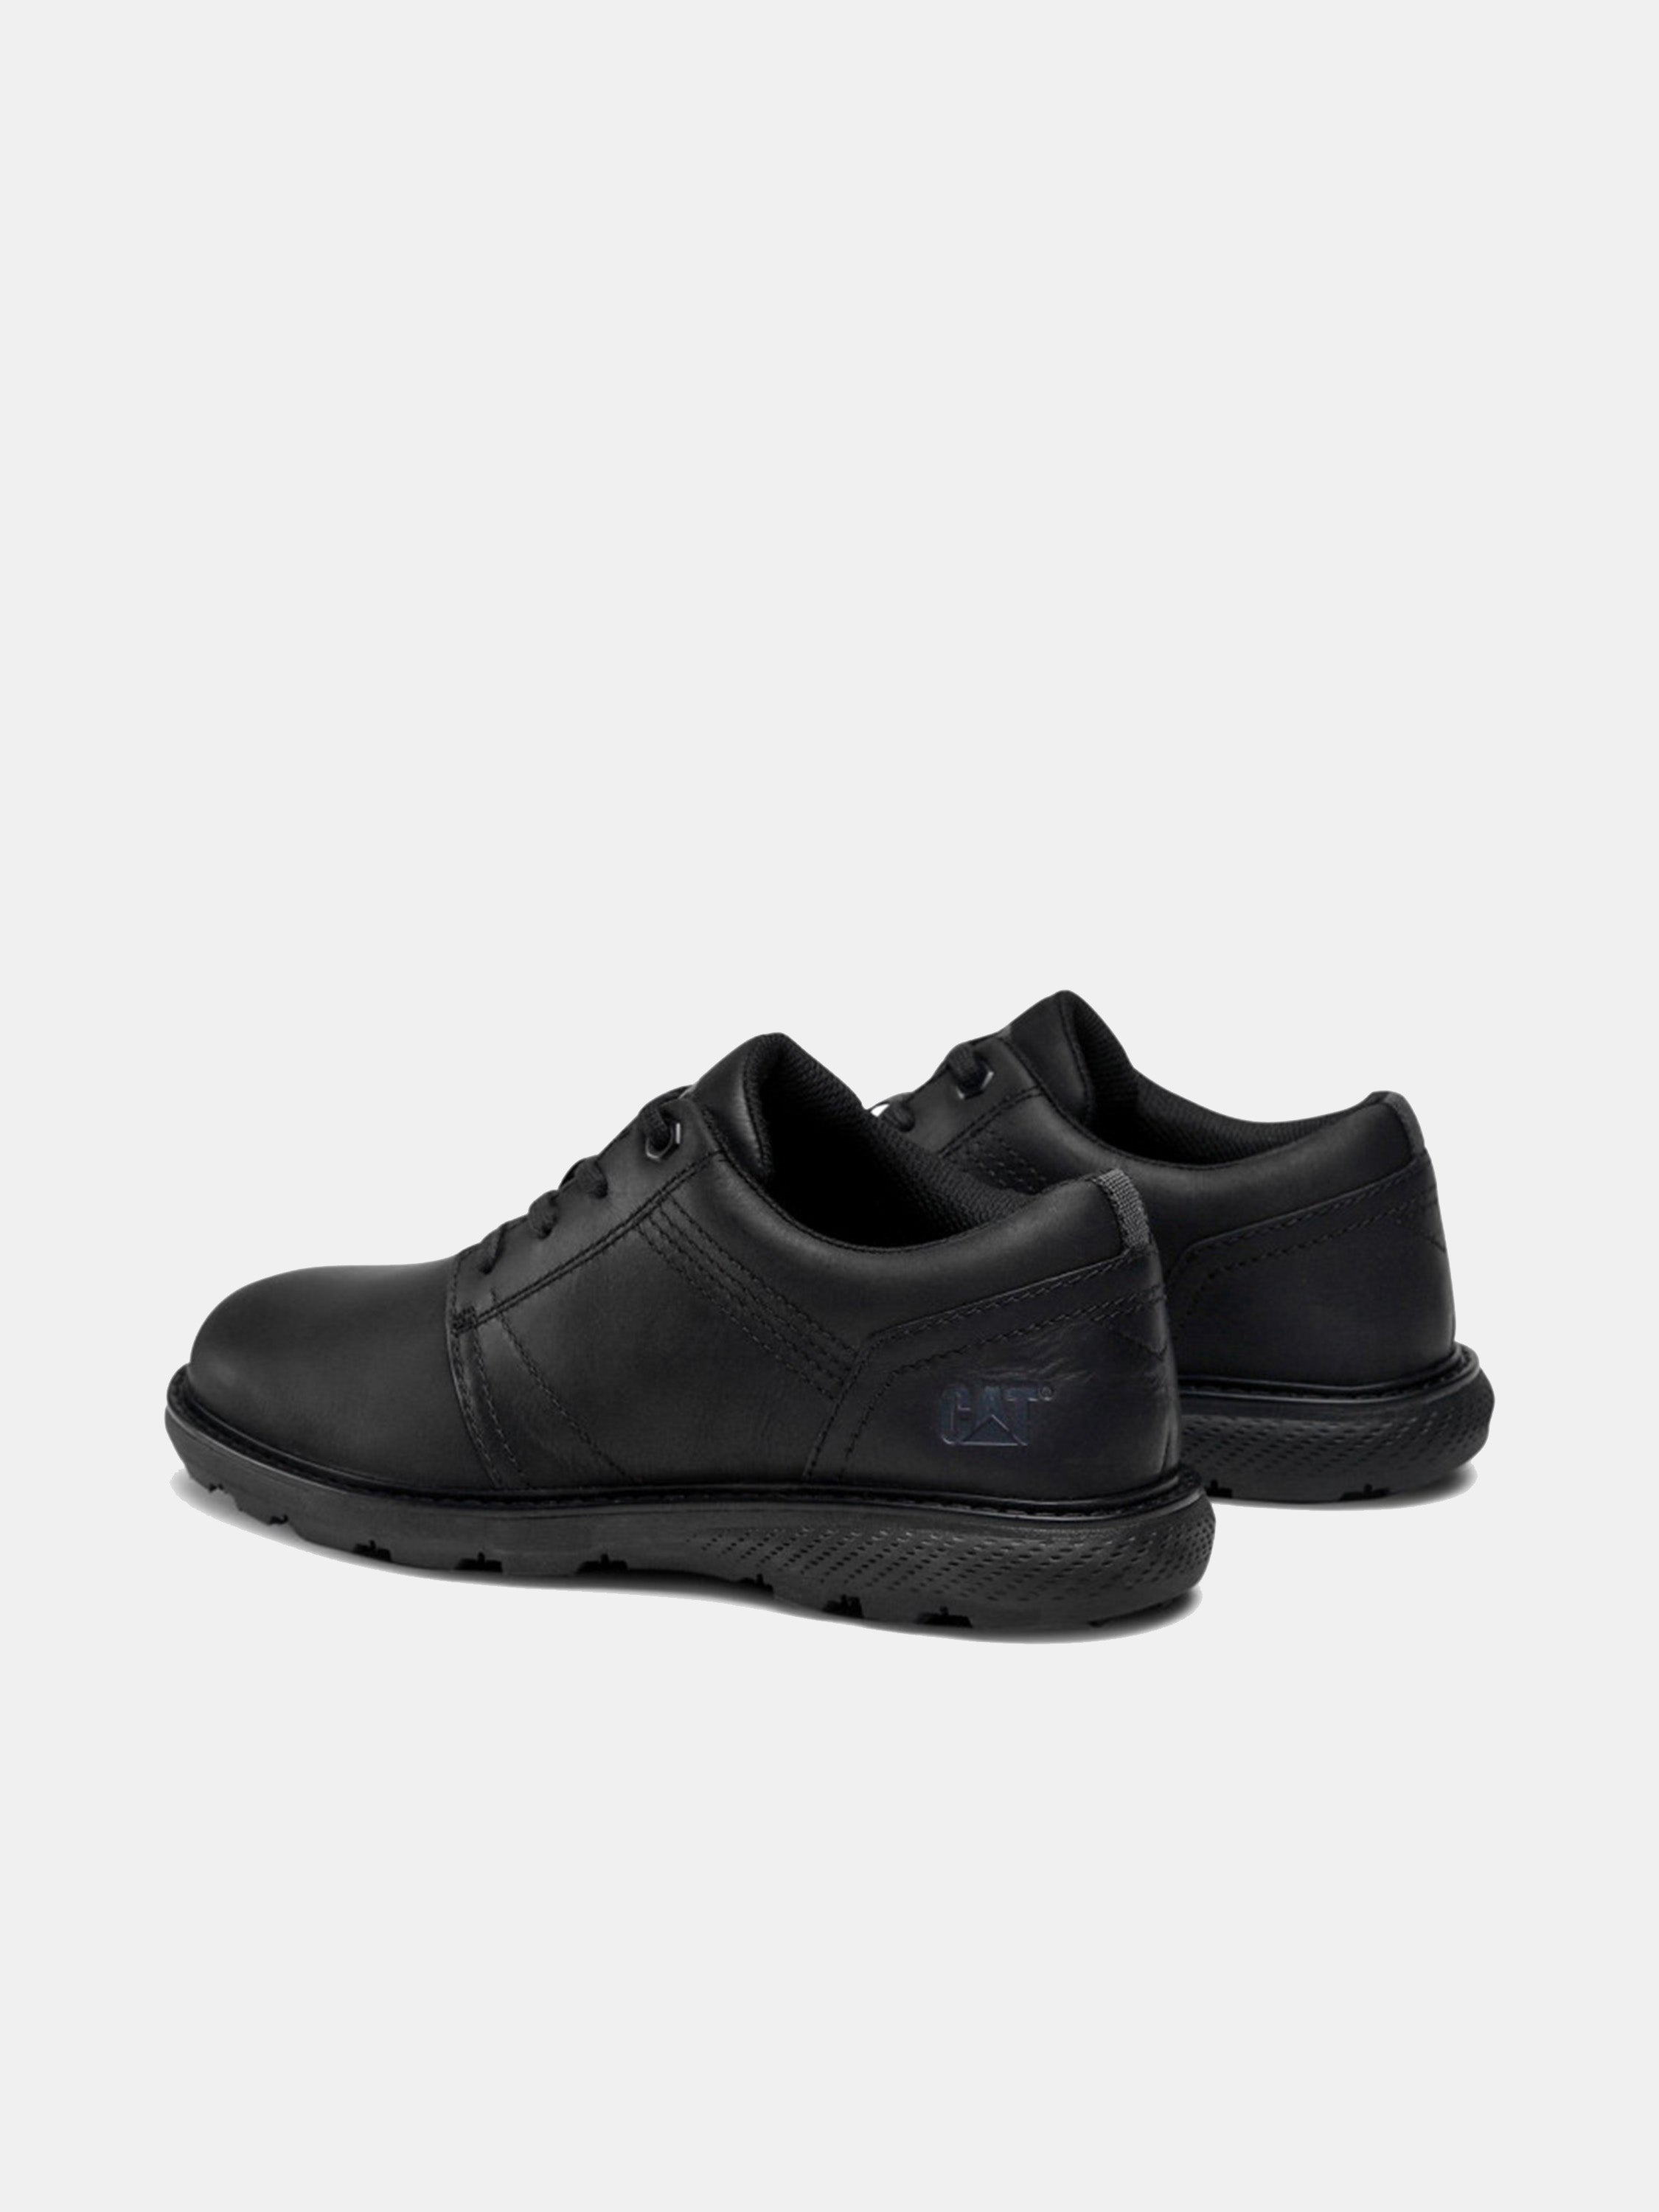 Caterpillar Men's Oly 2.0 Lace Up Shoes #color_Black